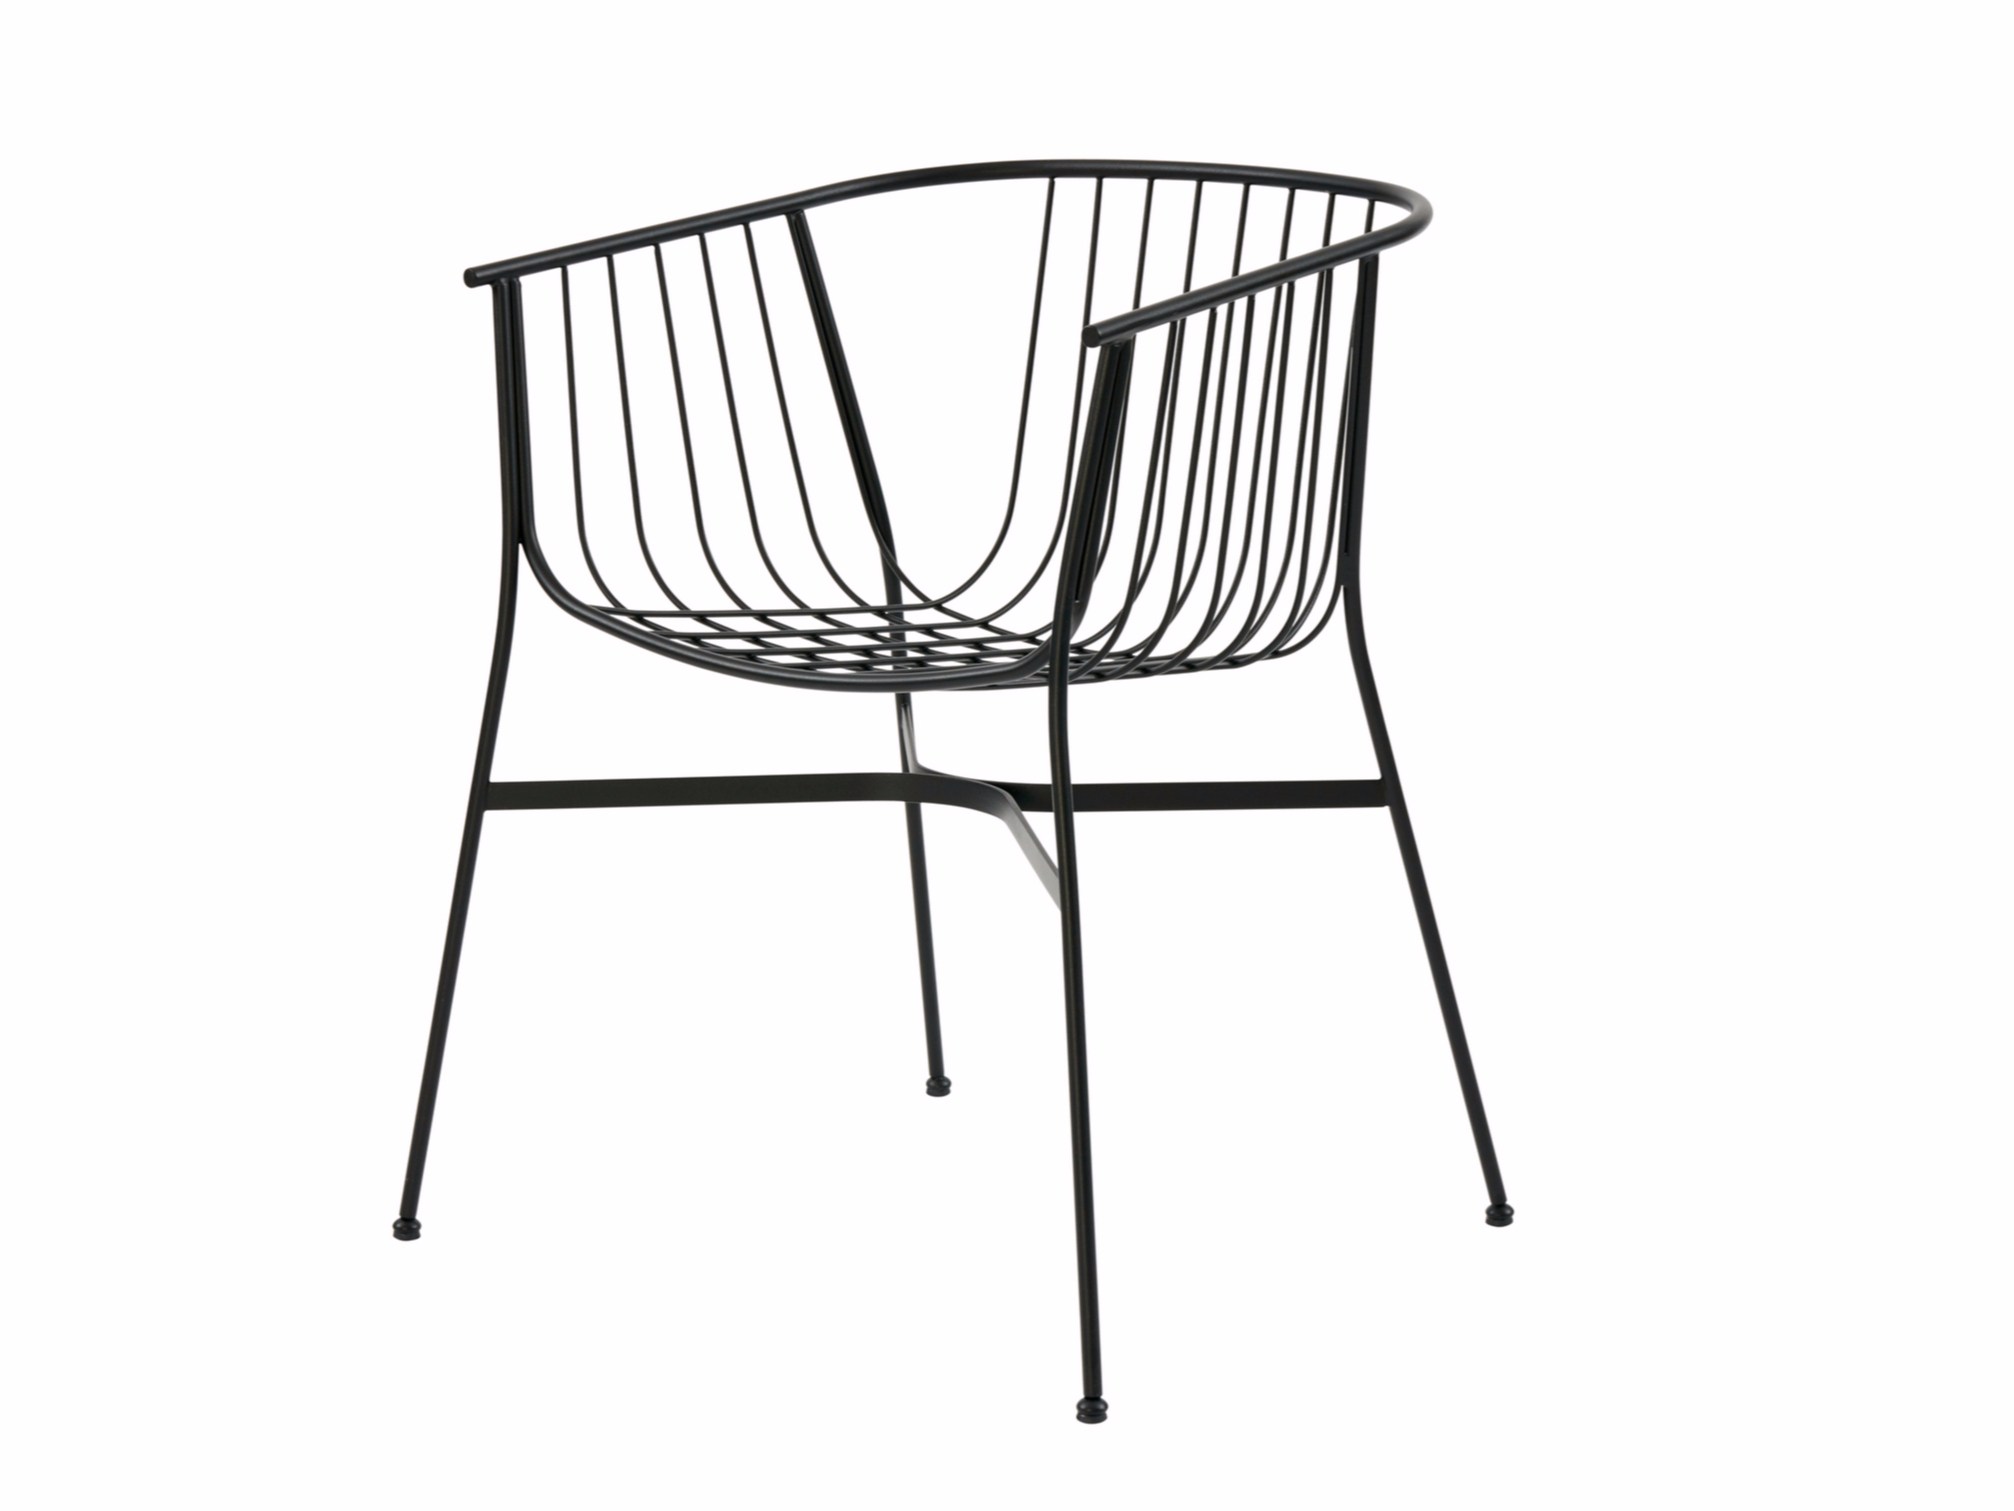 Powder Coated Steel Garden Chair by Tom Fereday